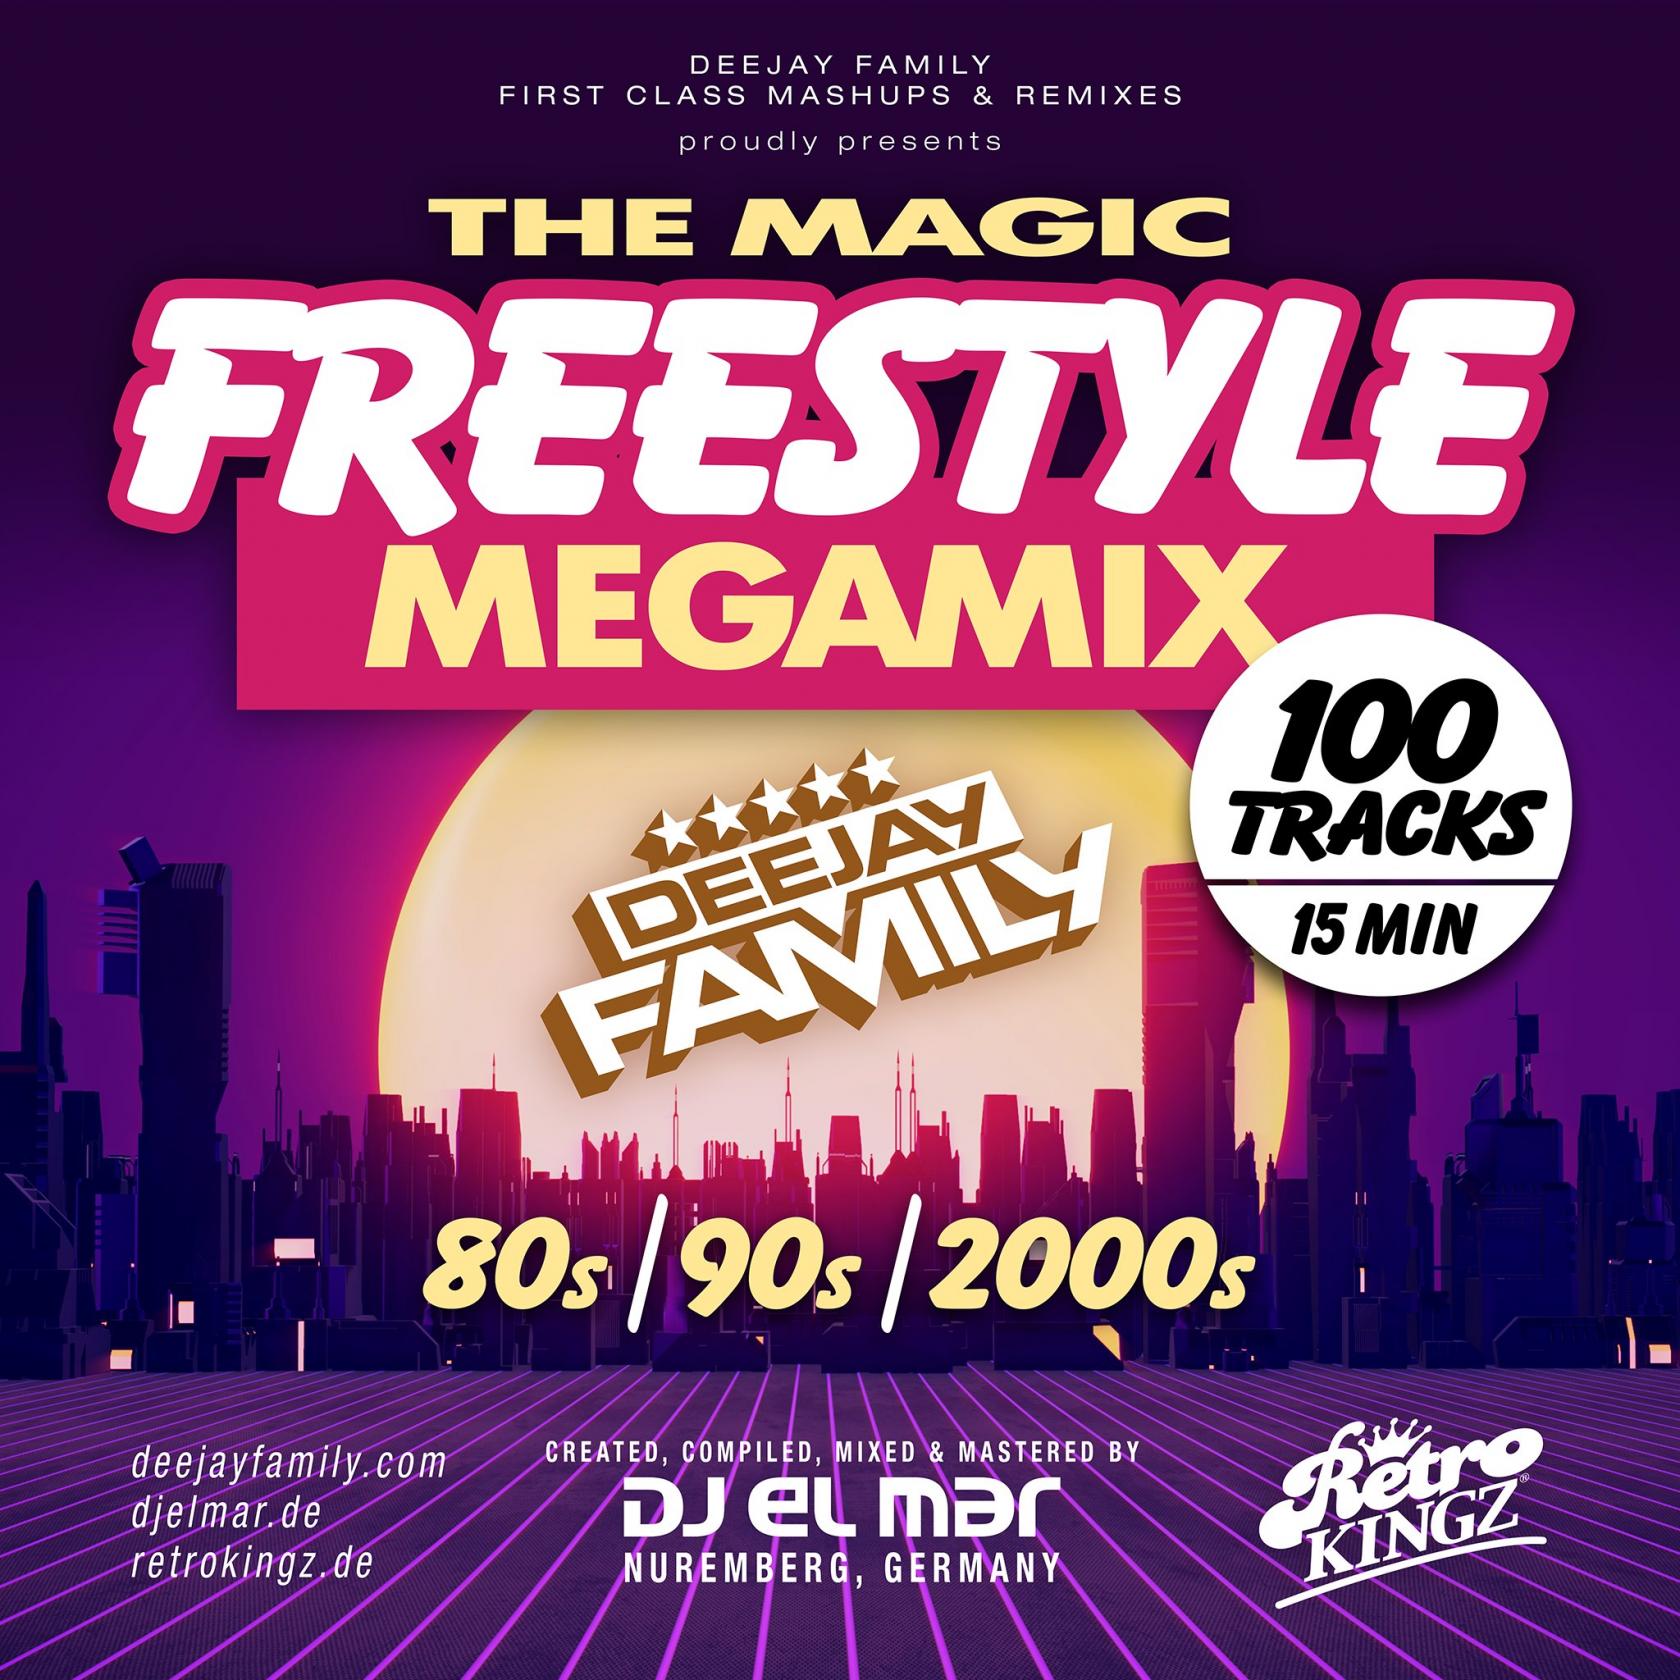 The Magic Freestyle Megamix